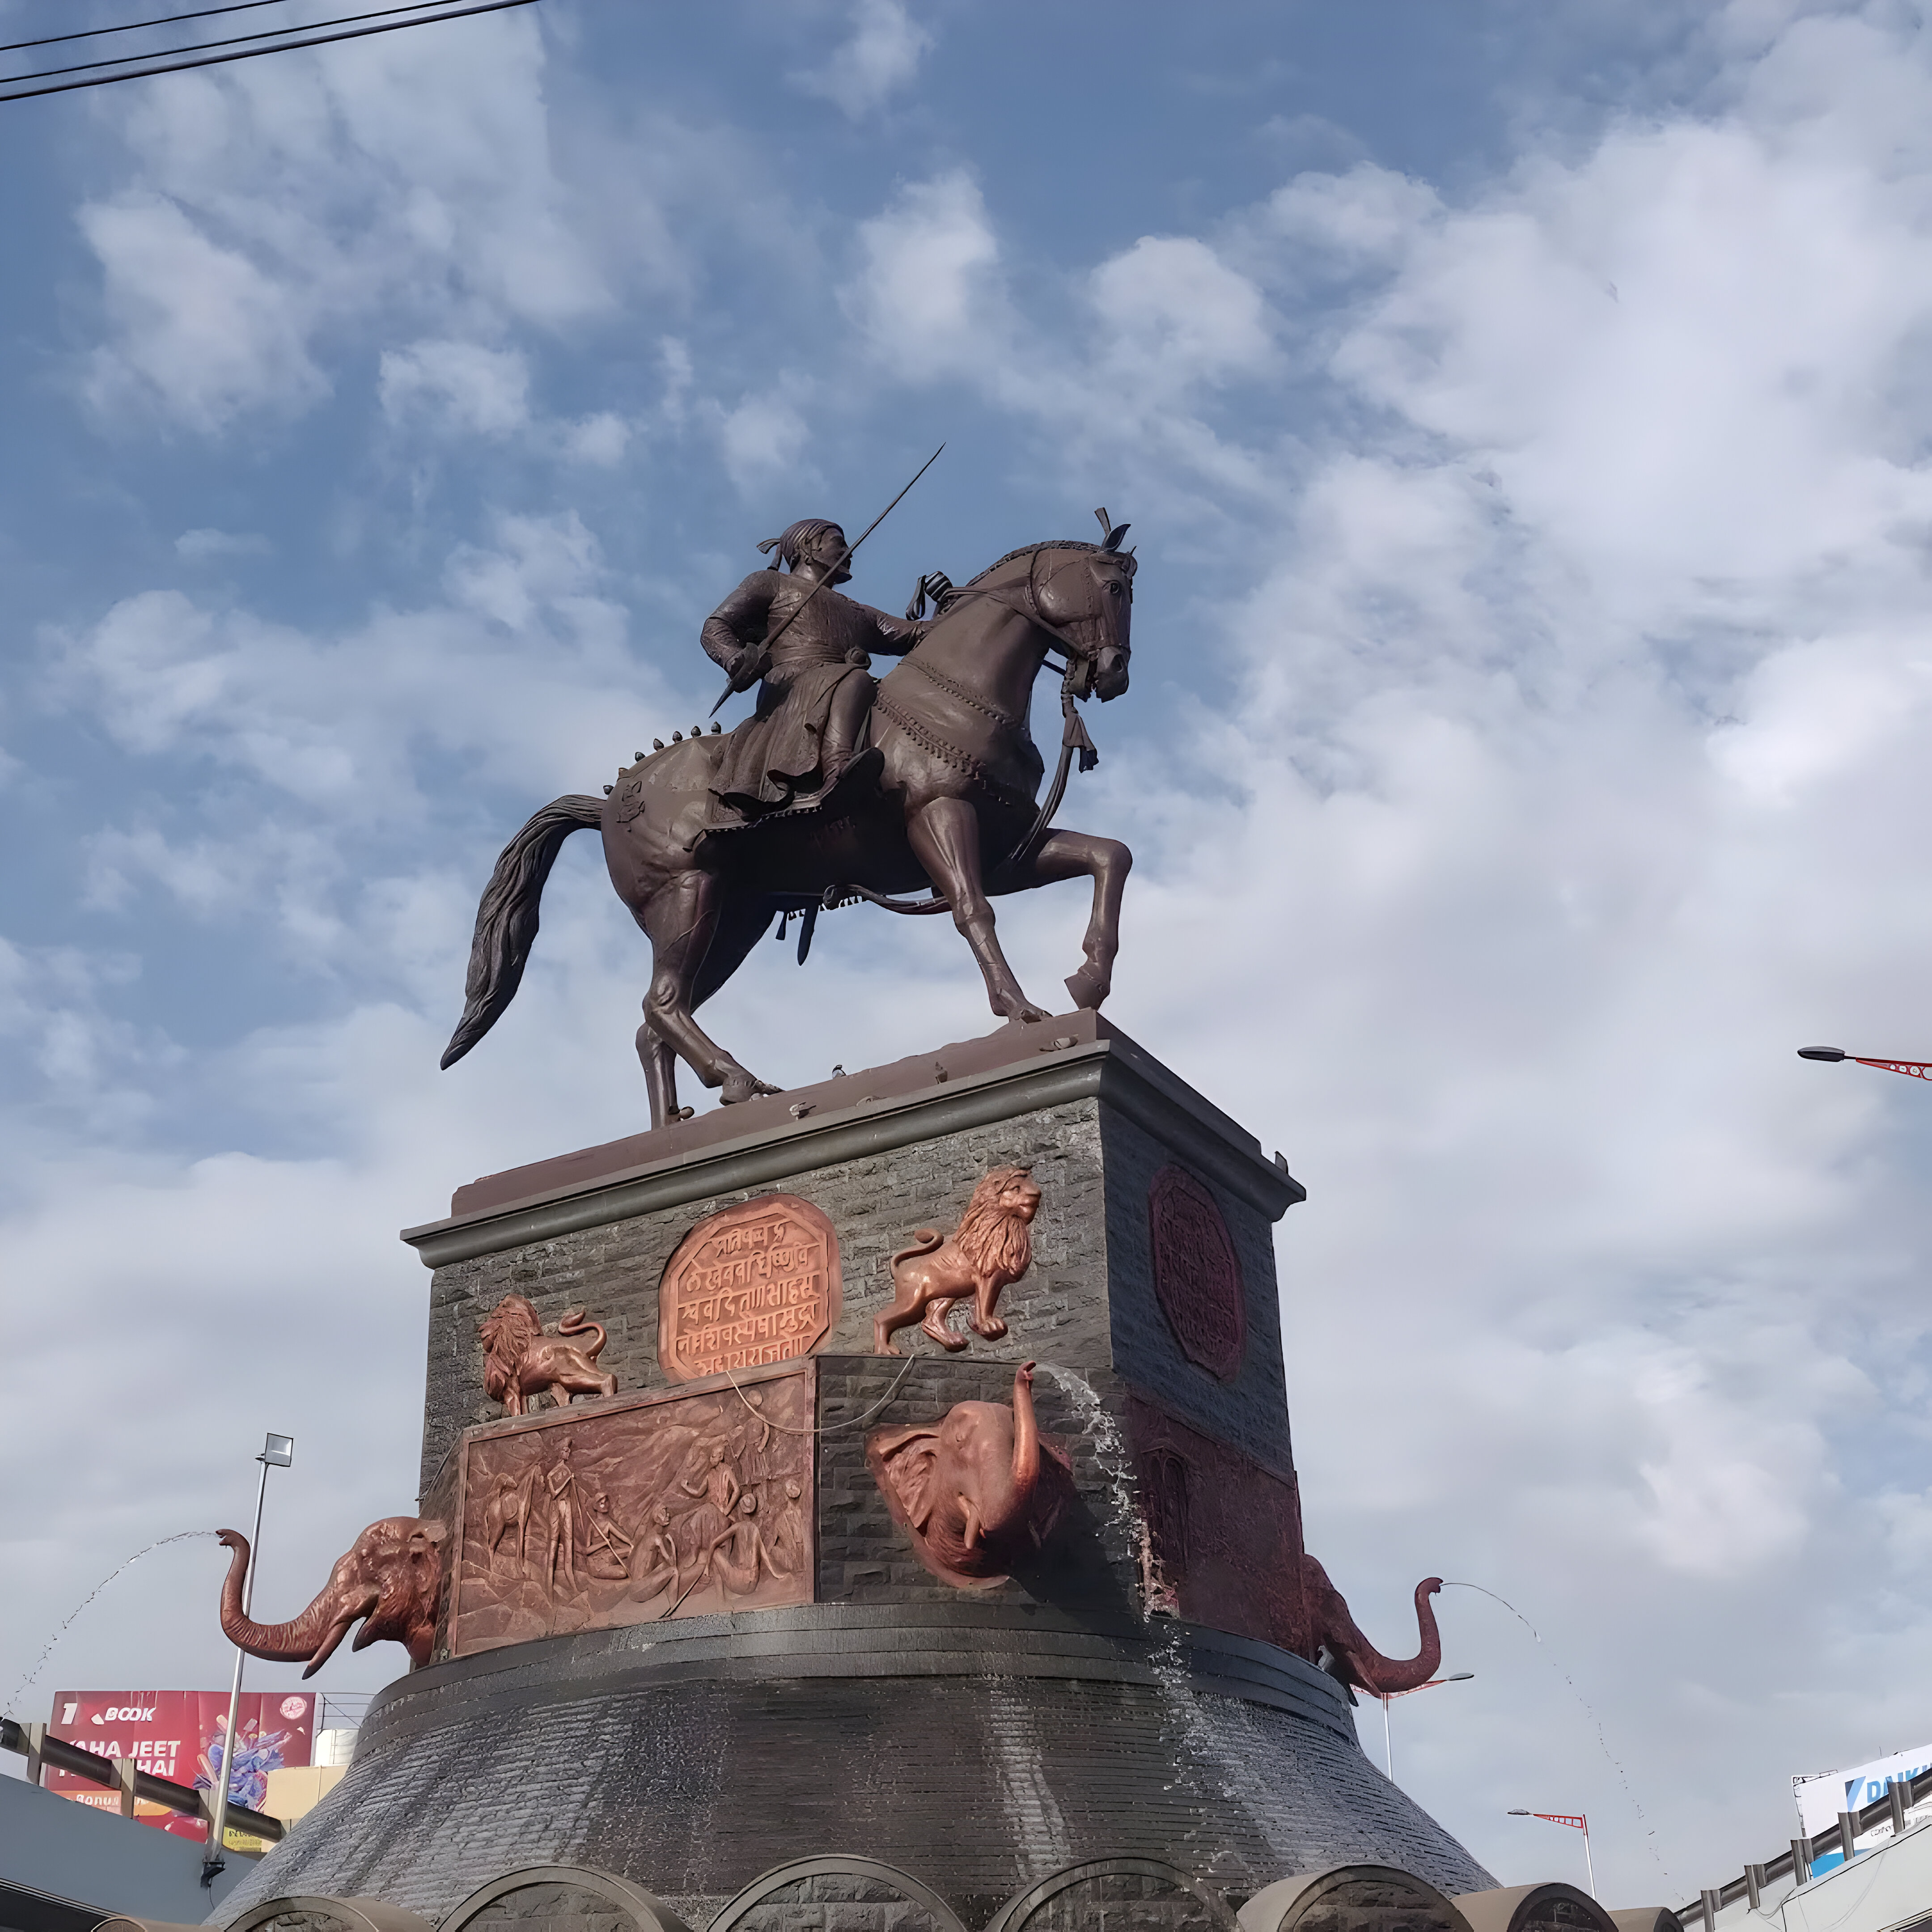 A beautiful image of stature of Chhatrapati Shivaji Maharaj.